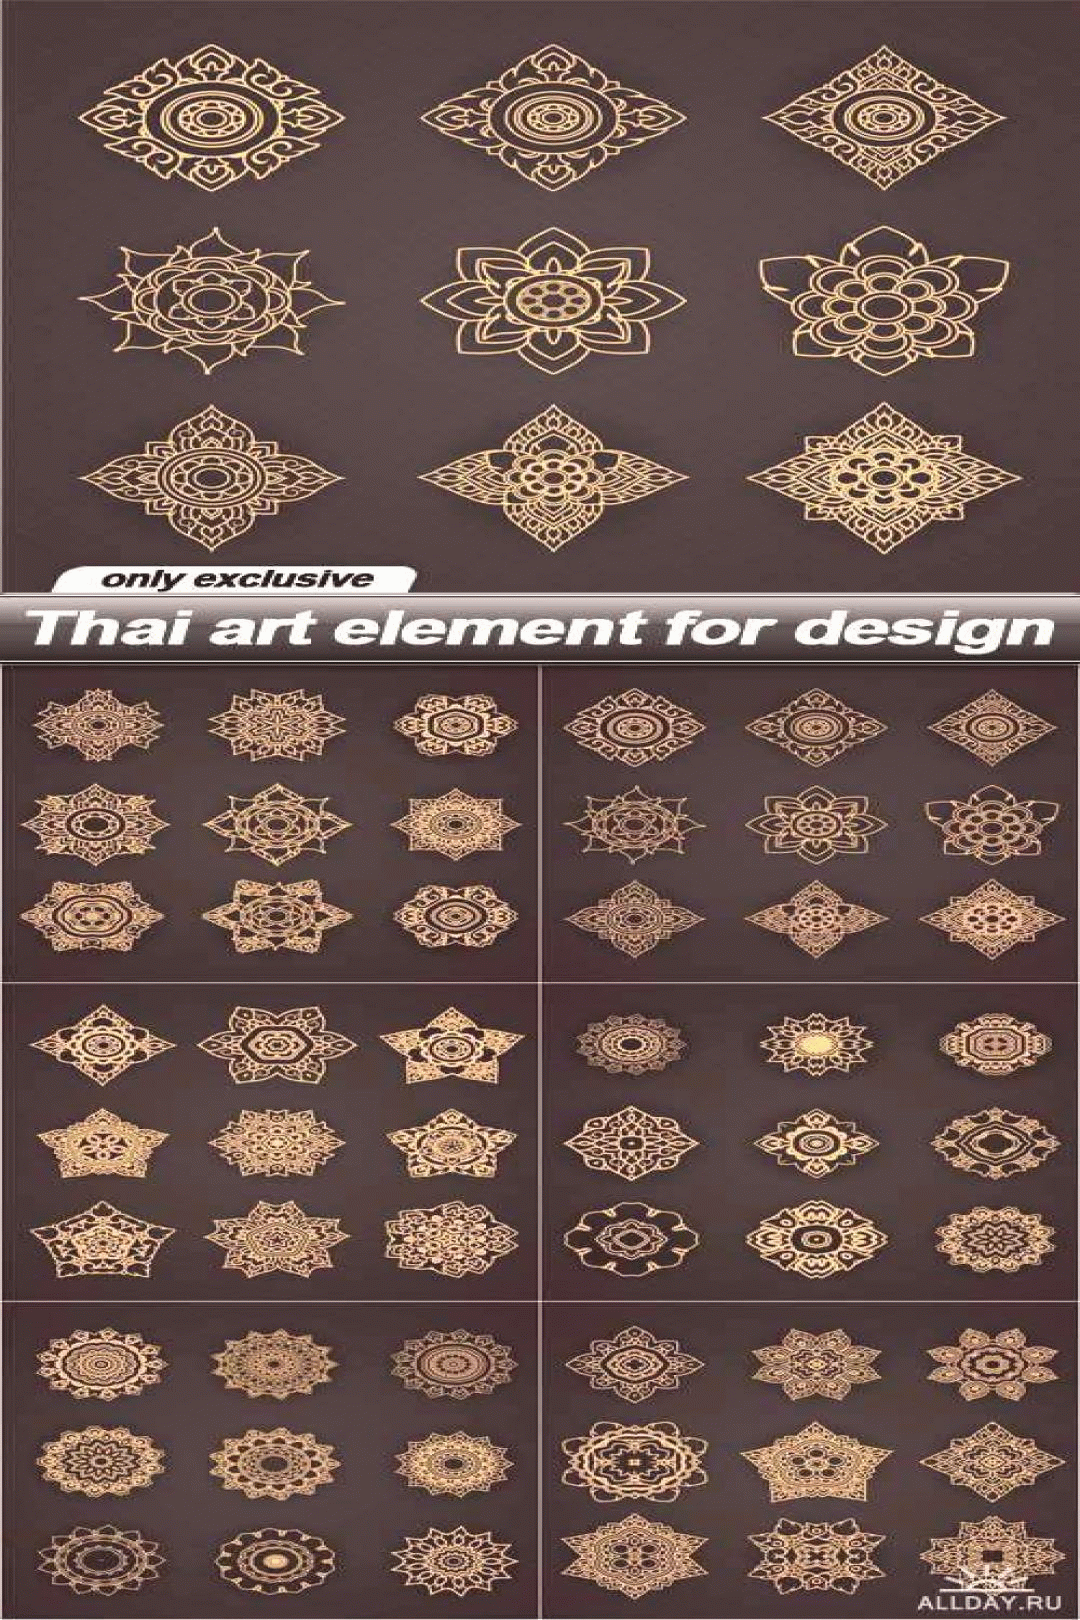 thai art element for design 6 eps in 2020 thai art medium